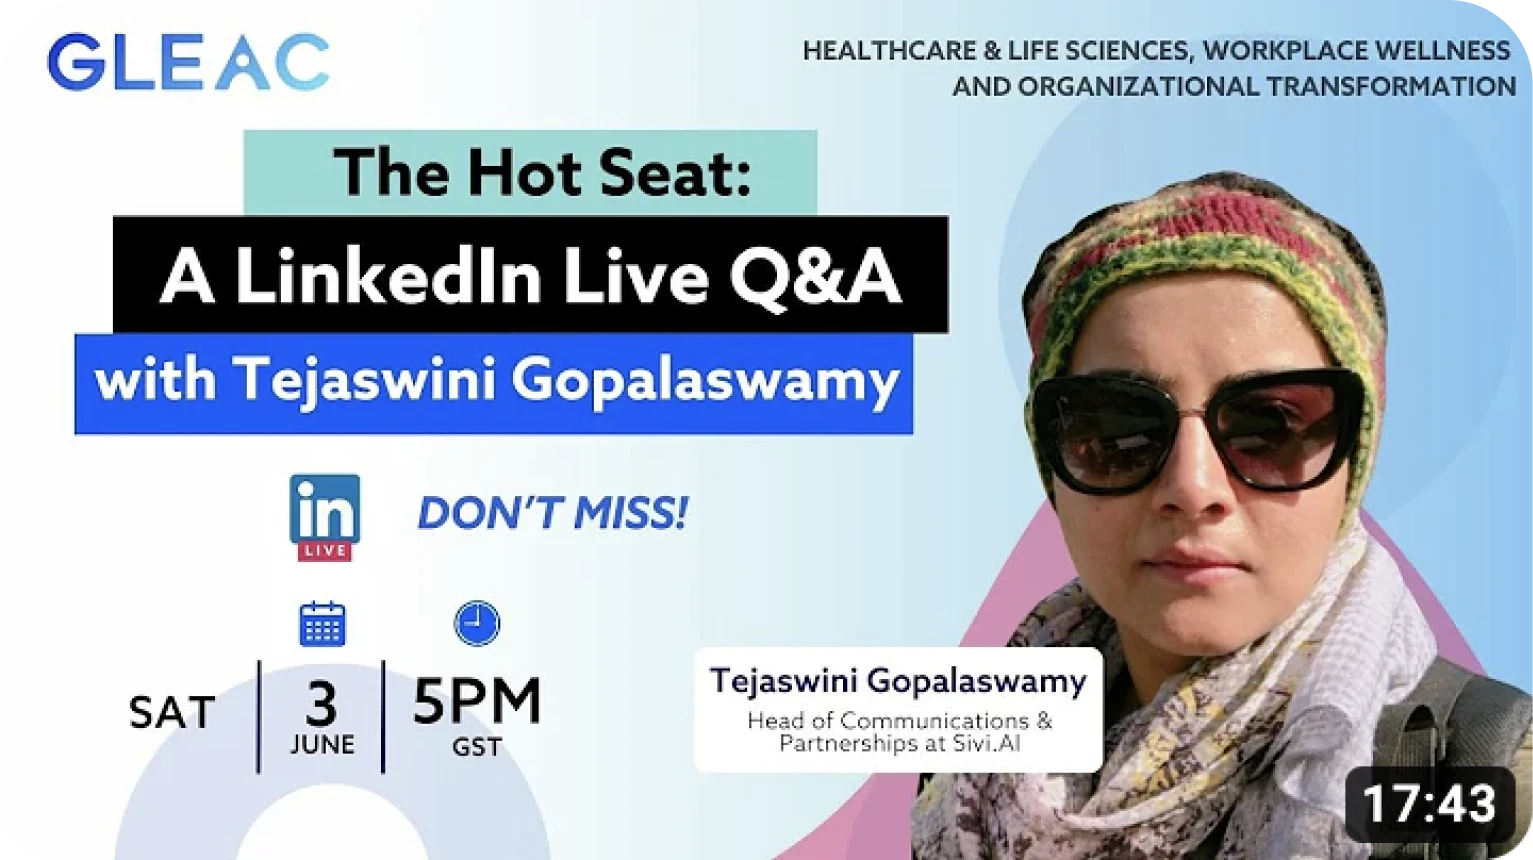 The Hot Seat: LinkedIn Live with Tejaswini Gopalaswamy